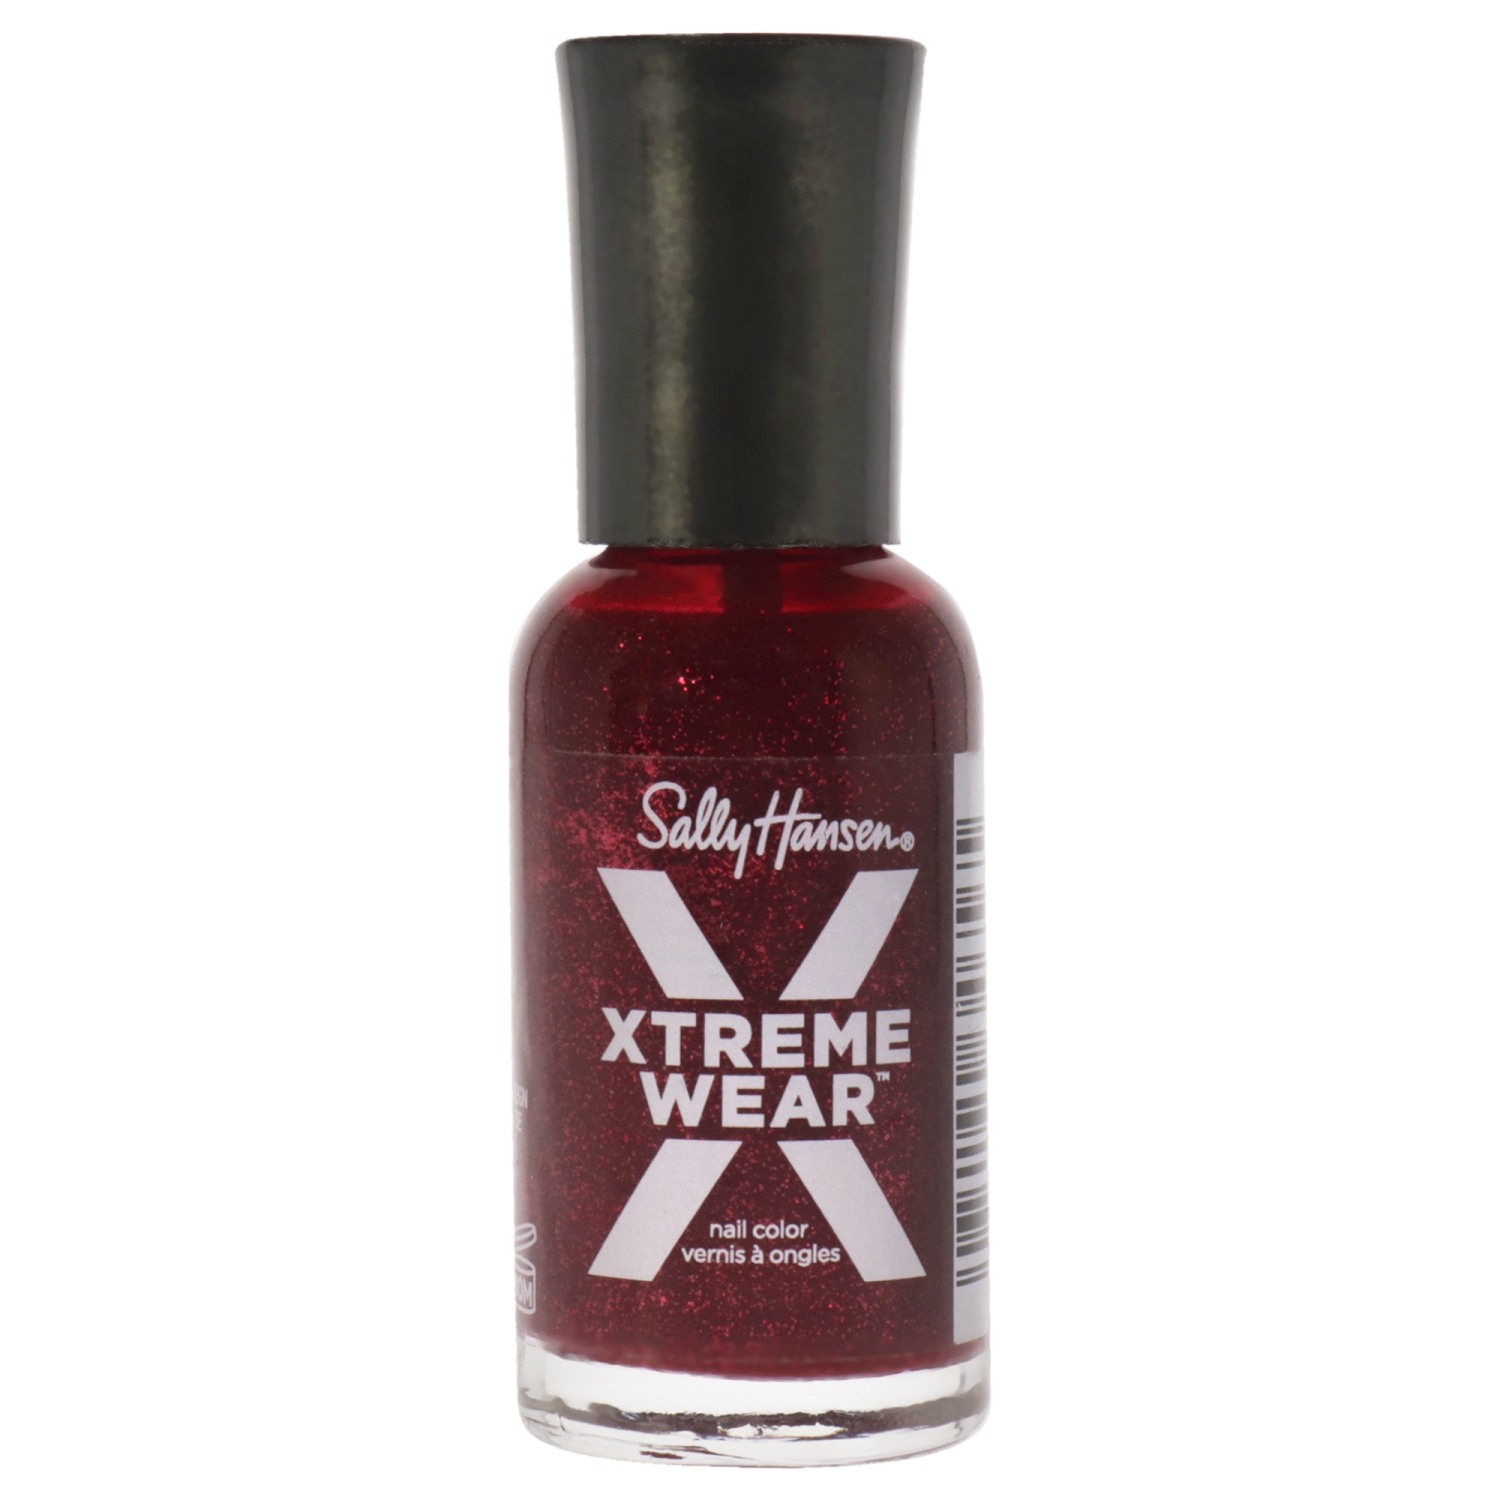 Xtreme Wear Nail Color - 579 Red Carpet by Sally Hansen for Women - 0.4 oz Nail Polish